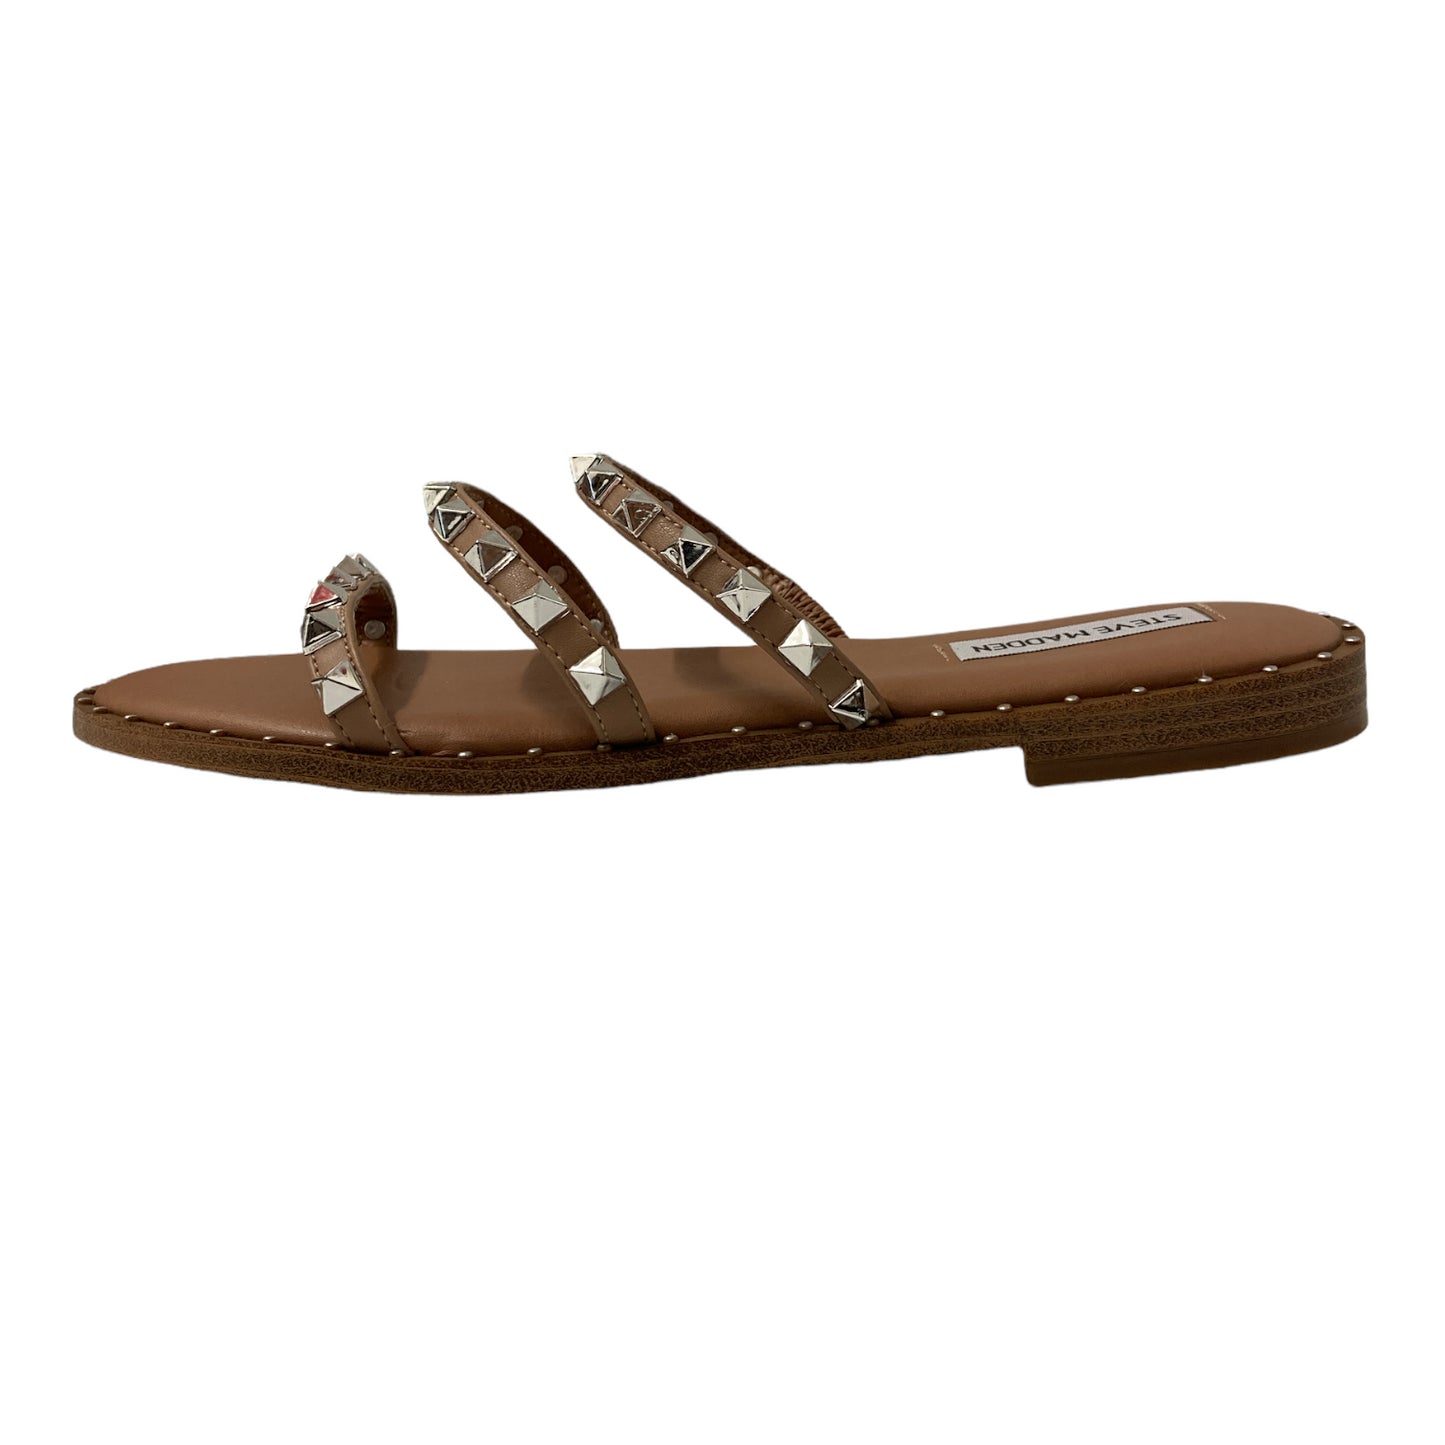 Steve Madden Slip-On Three Band Studded Comfort Fashion Sandals